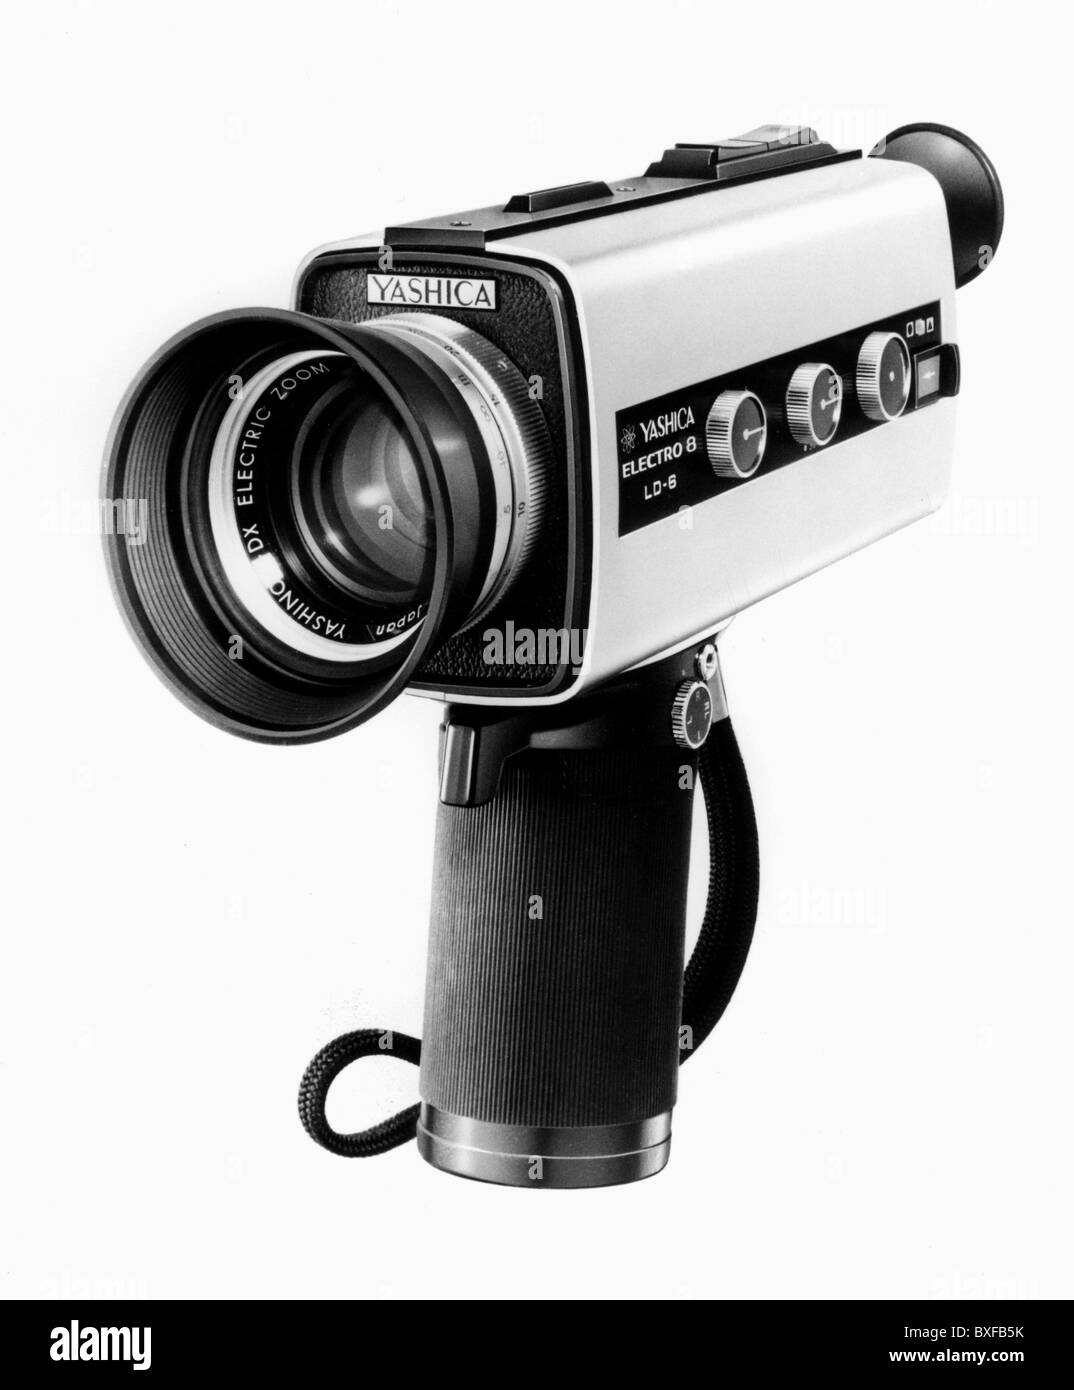 Fotografie, Kameras, Yashica Electro 8 LD-6 Super 8 Kamera, um 1970, Technik, 20. Jahrhundert, historisch, historisch, 8mm, Film, LD 6, Ausschnitt, Ausschnitt, Ausschnitt, Ausschnitte, 1960er, 1970er, zusätzliche-Rechte-Clearences-nicht verfügbar Stockfoto